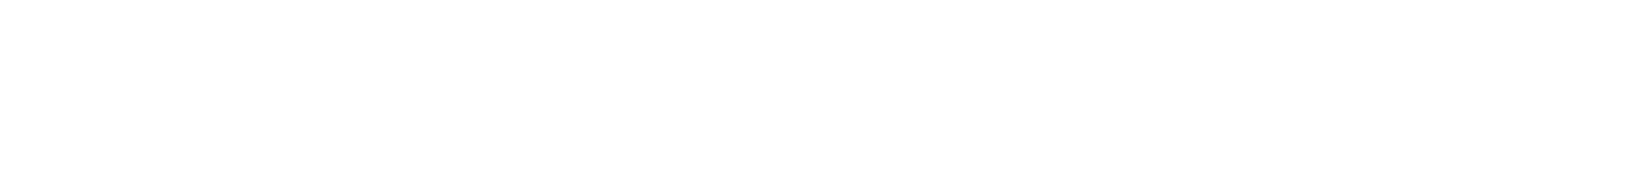 Pearl Abyss logo grand pour les fonds sombres (PNG transparent)